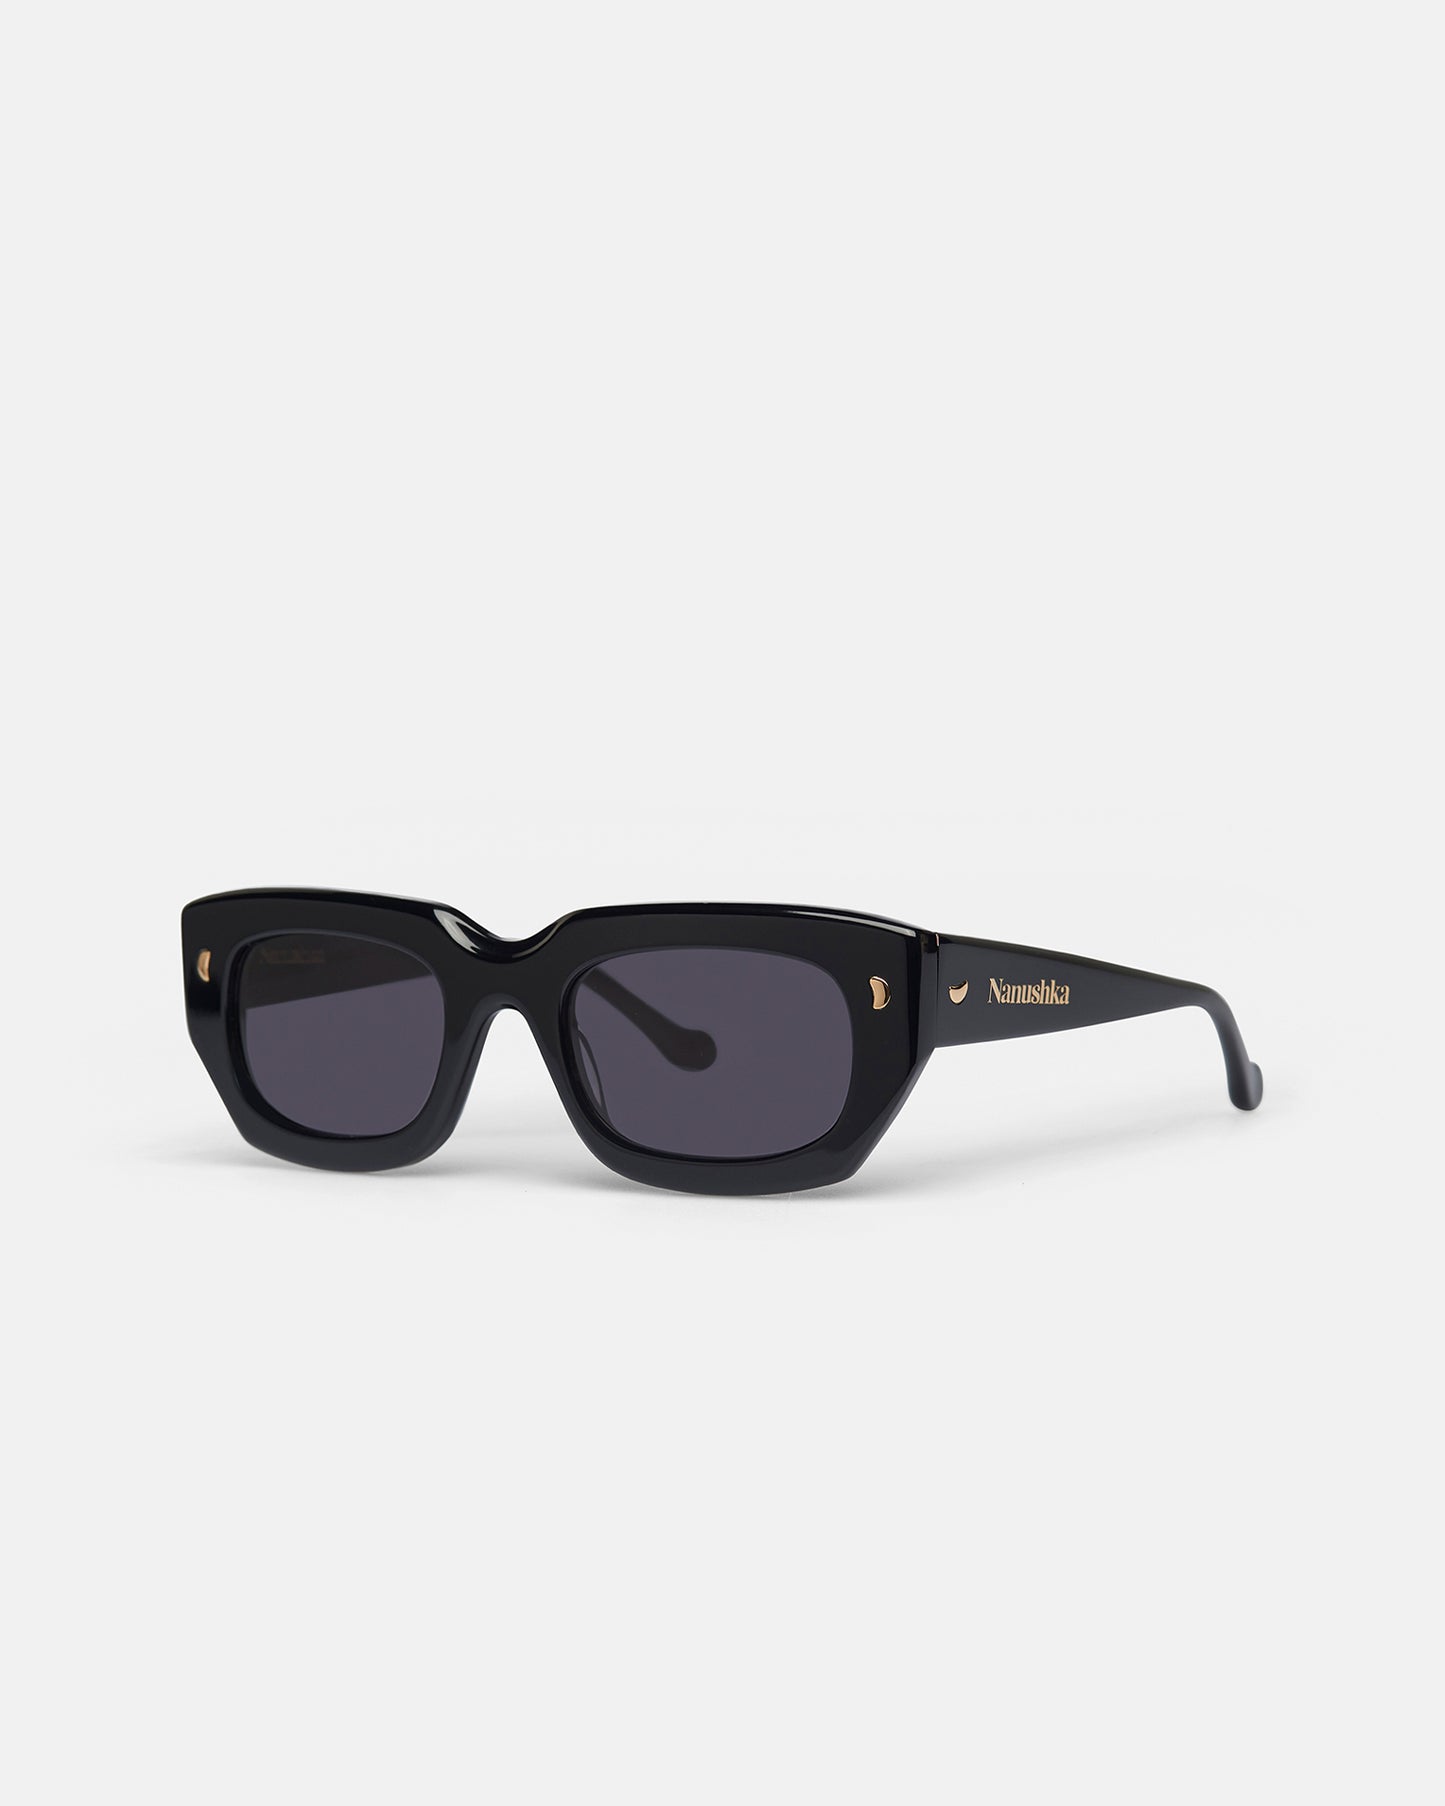 Harley - Bio-Plastic Sunglasses - Black